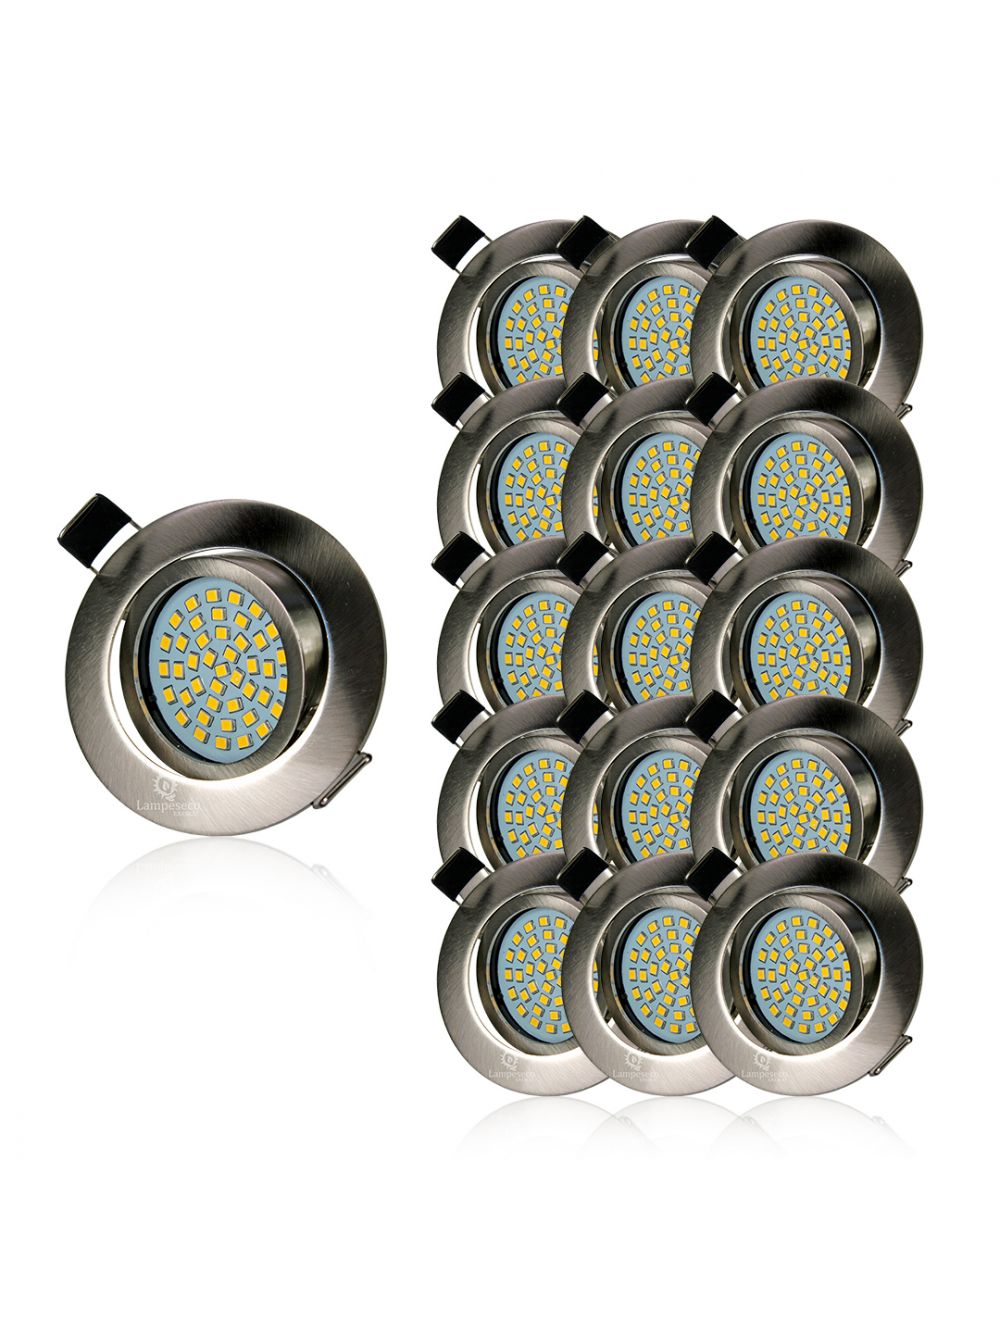 spot-encastrable-led-420-lumens-rond-extra-plat-aluminium-blanc-cuisine 6w